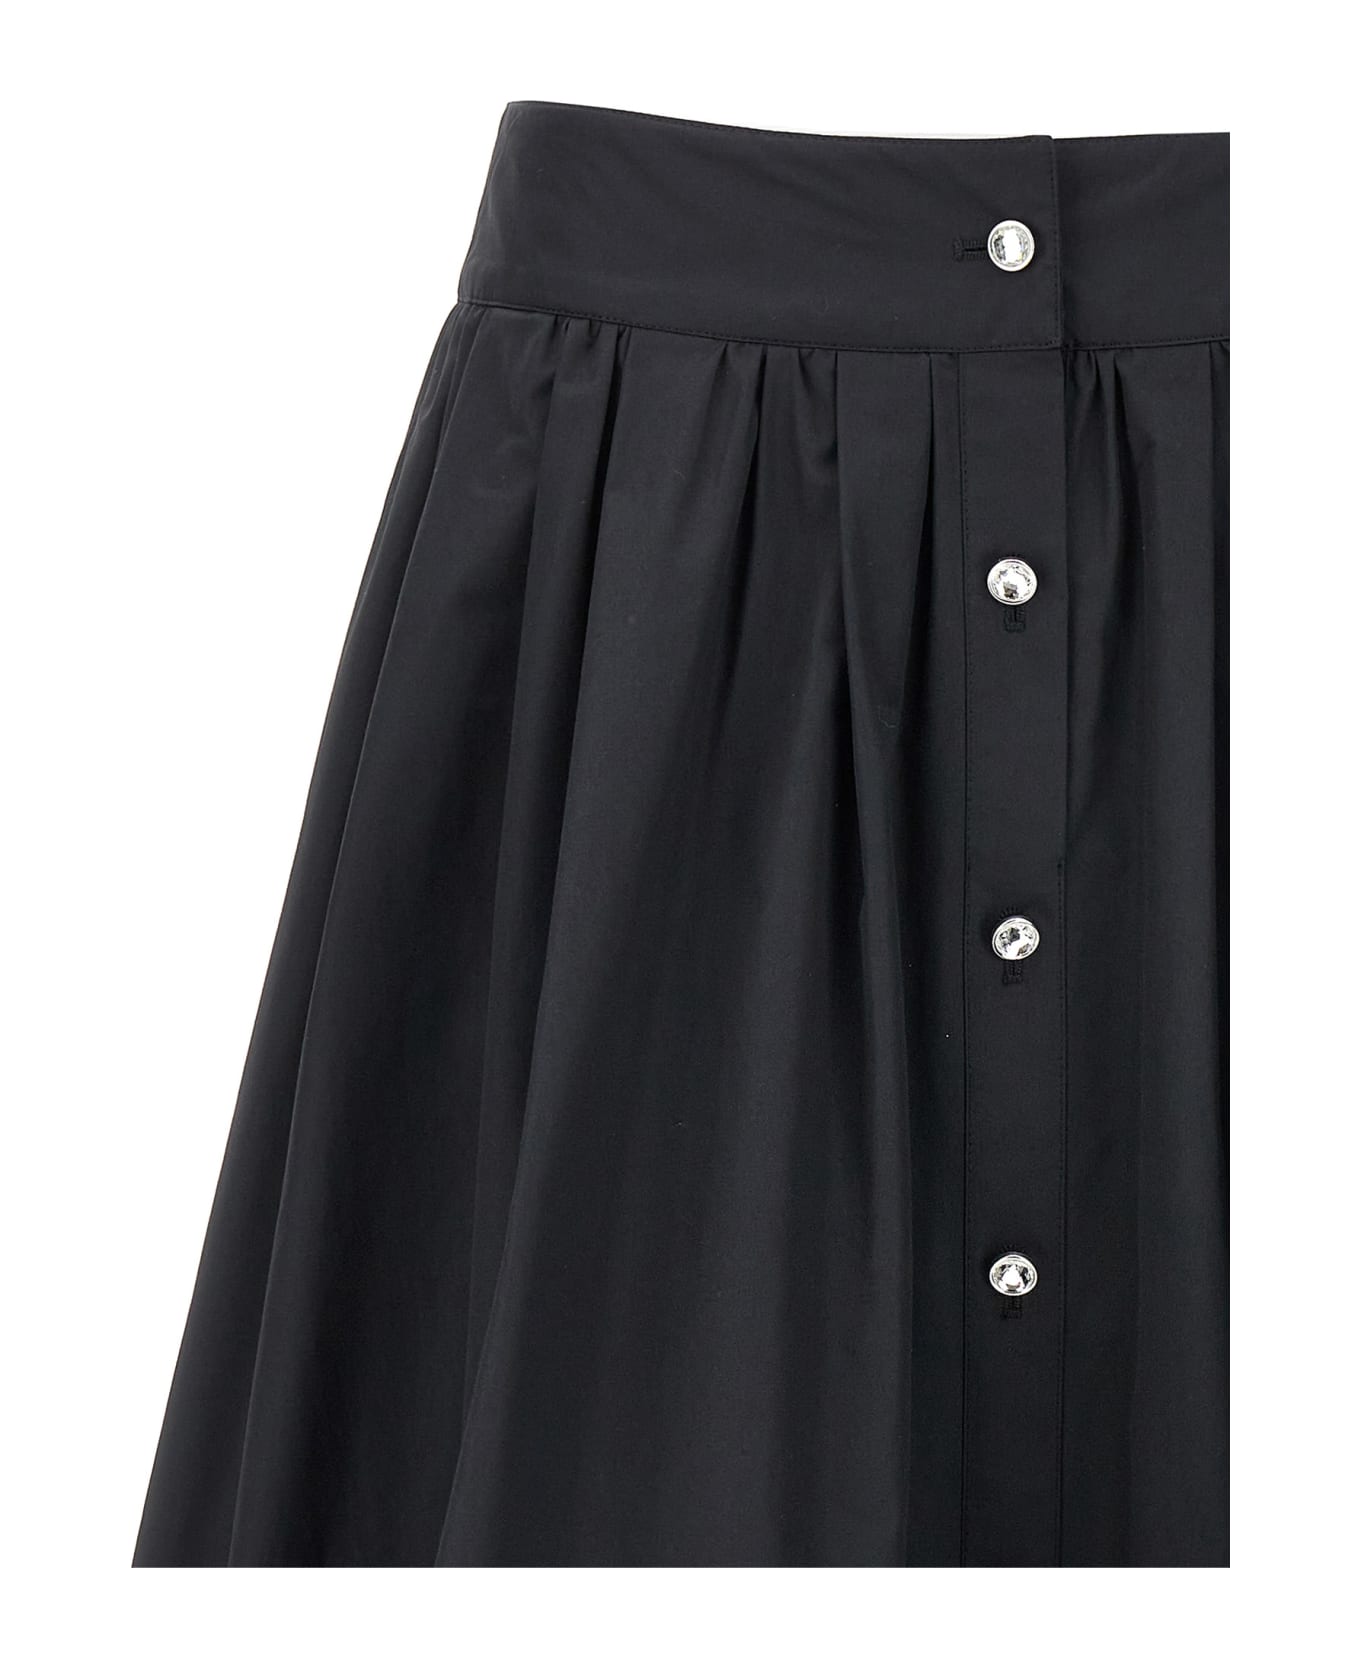 Moschino Jewel Button Nylon Blend Skirt - Black  